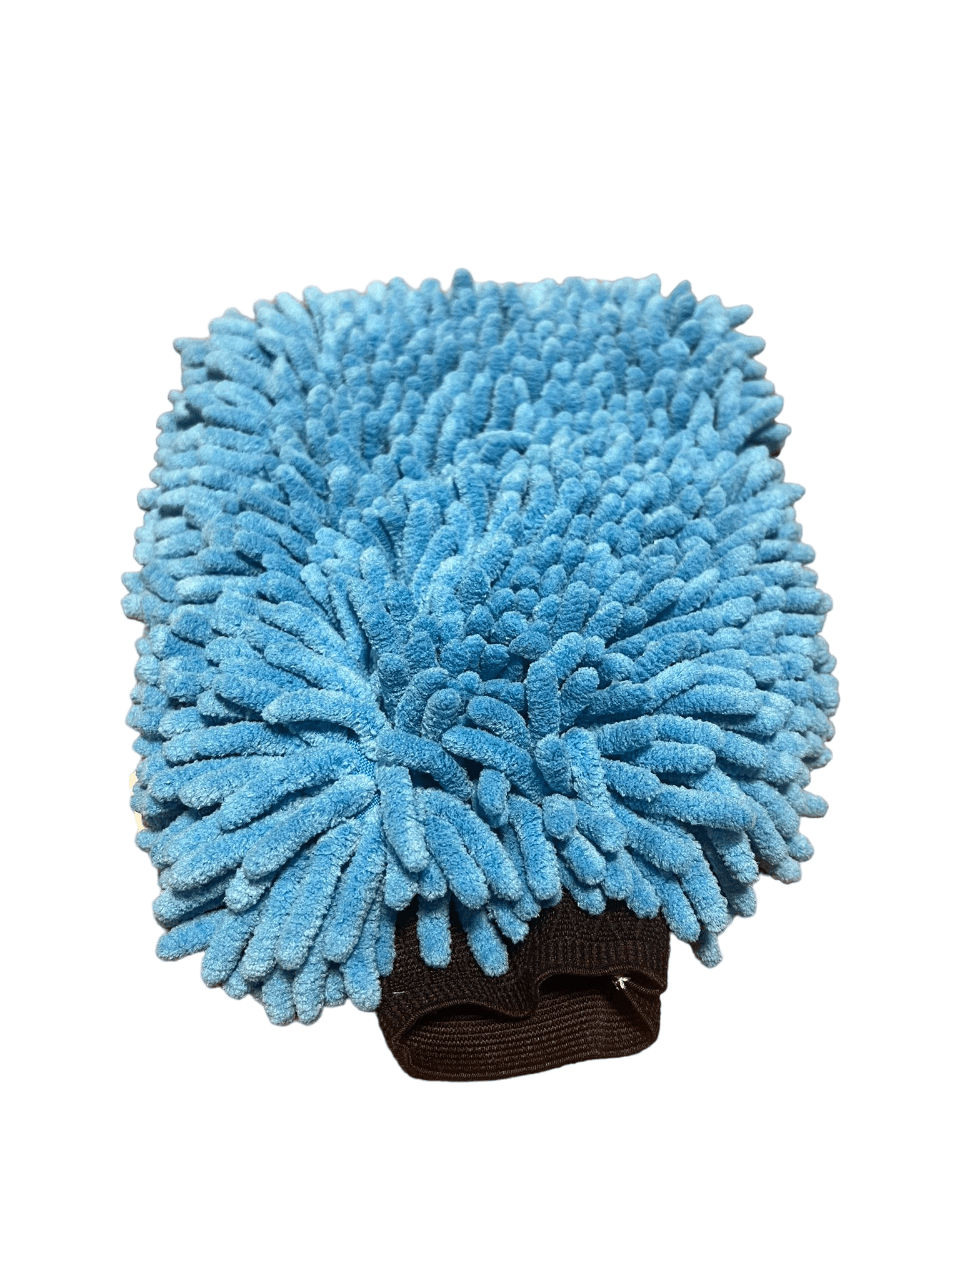 Euphrate Kfz Mikrofiber Oto Yıkama Eldiveni Mavi 25x18 cm